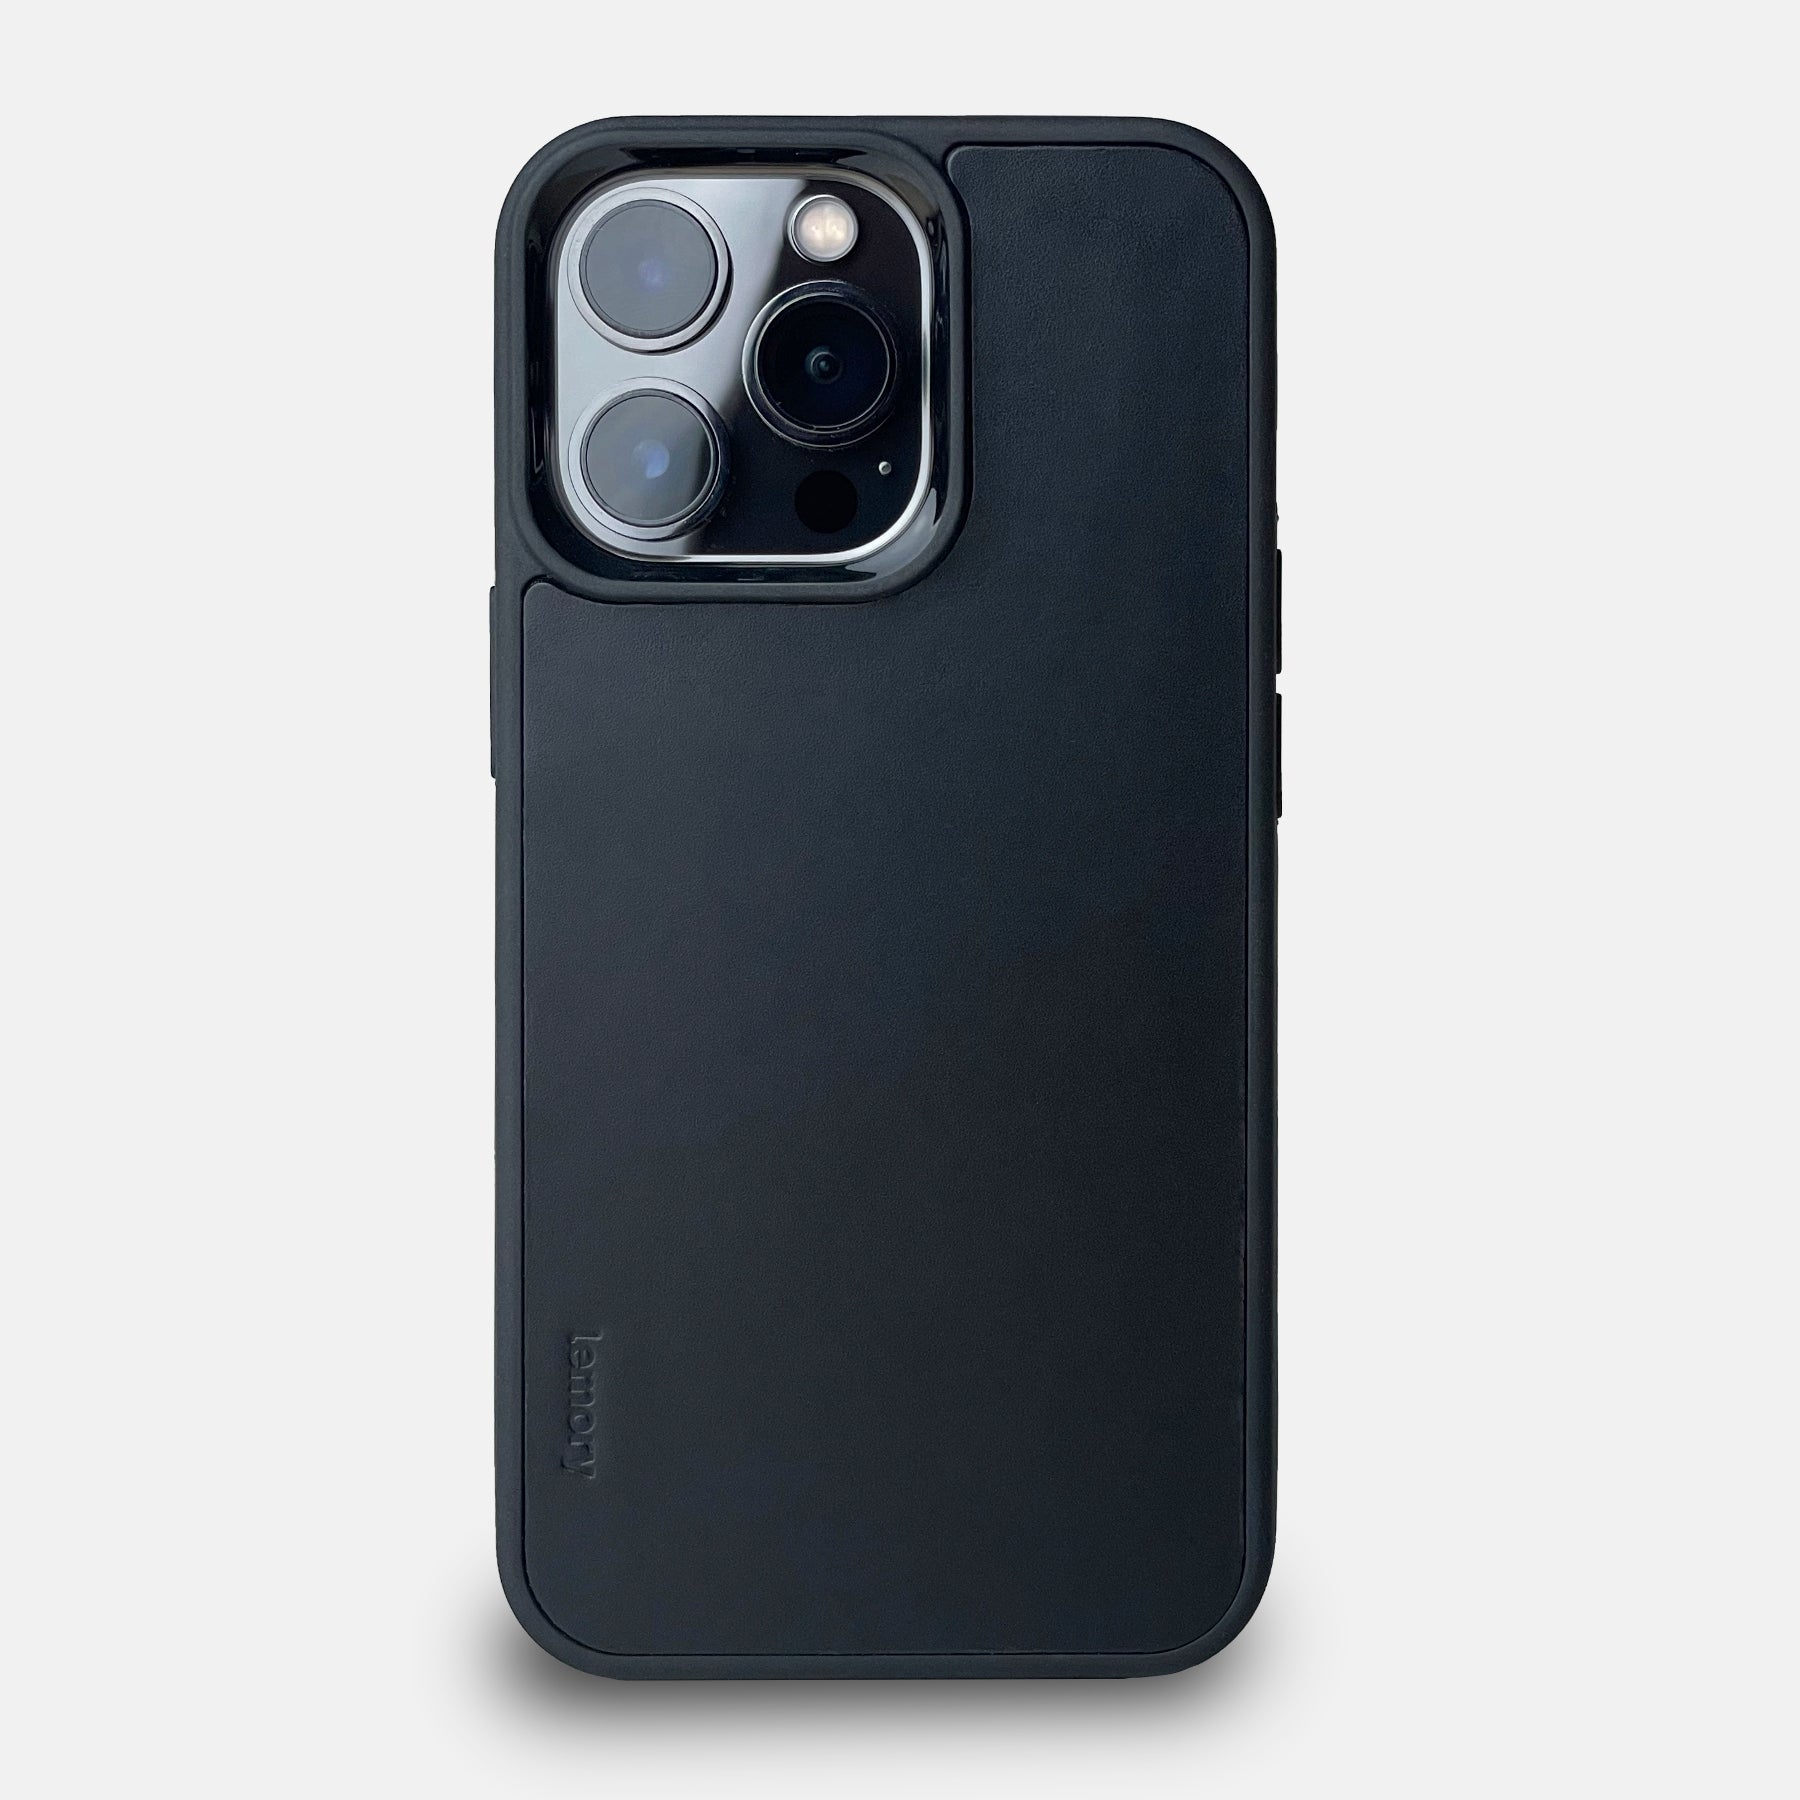 Prémiový kožený kryt Lemory PROTECT na mobil Apple iPhone 14 Pro Max černý (Prémiový kožený kryt, pouzdro, obal Lemory PROTECT na mobilní telefon Apple iPhone 14 Pro Max černý)